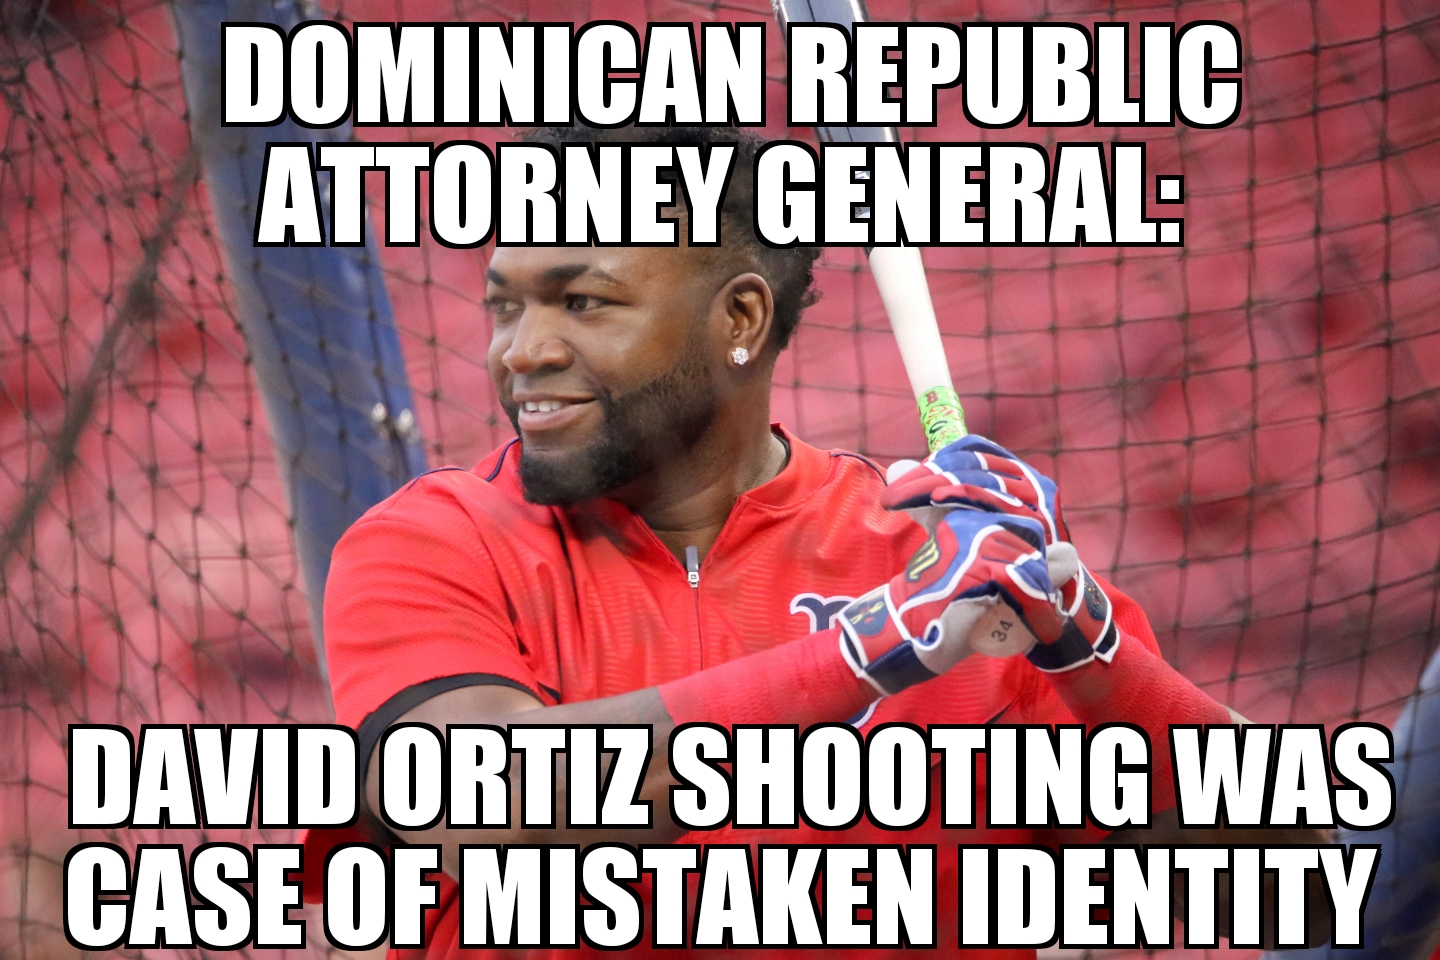 AG: David Ortiz shooting was case of mistaken identity